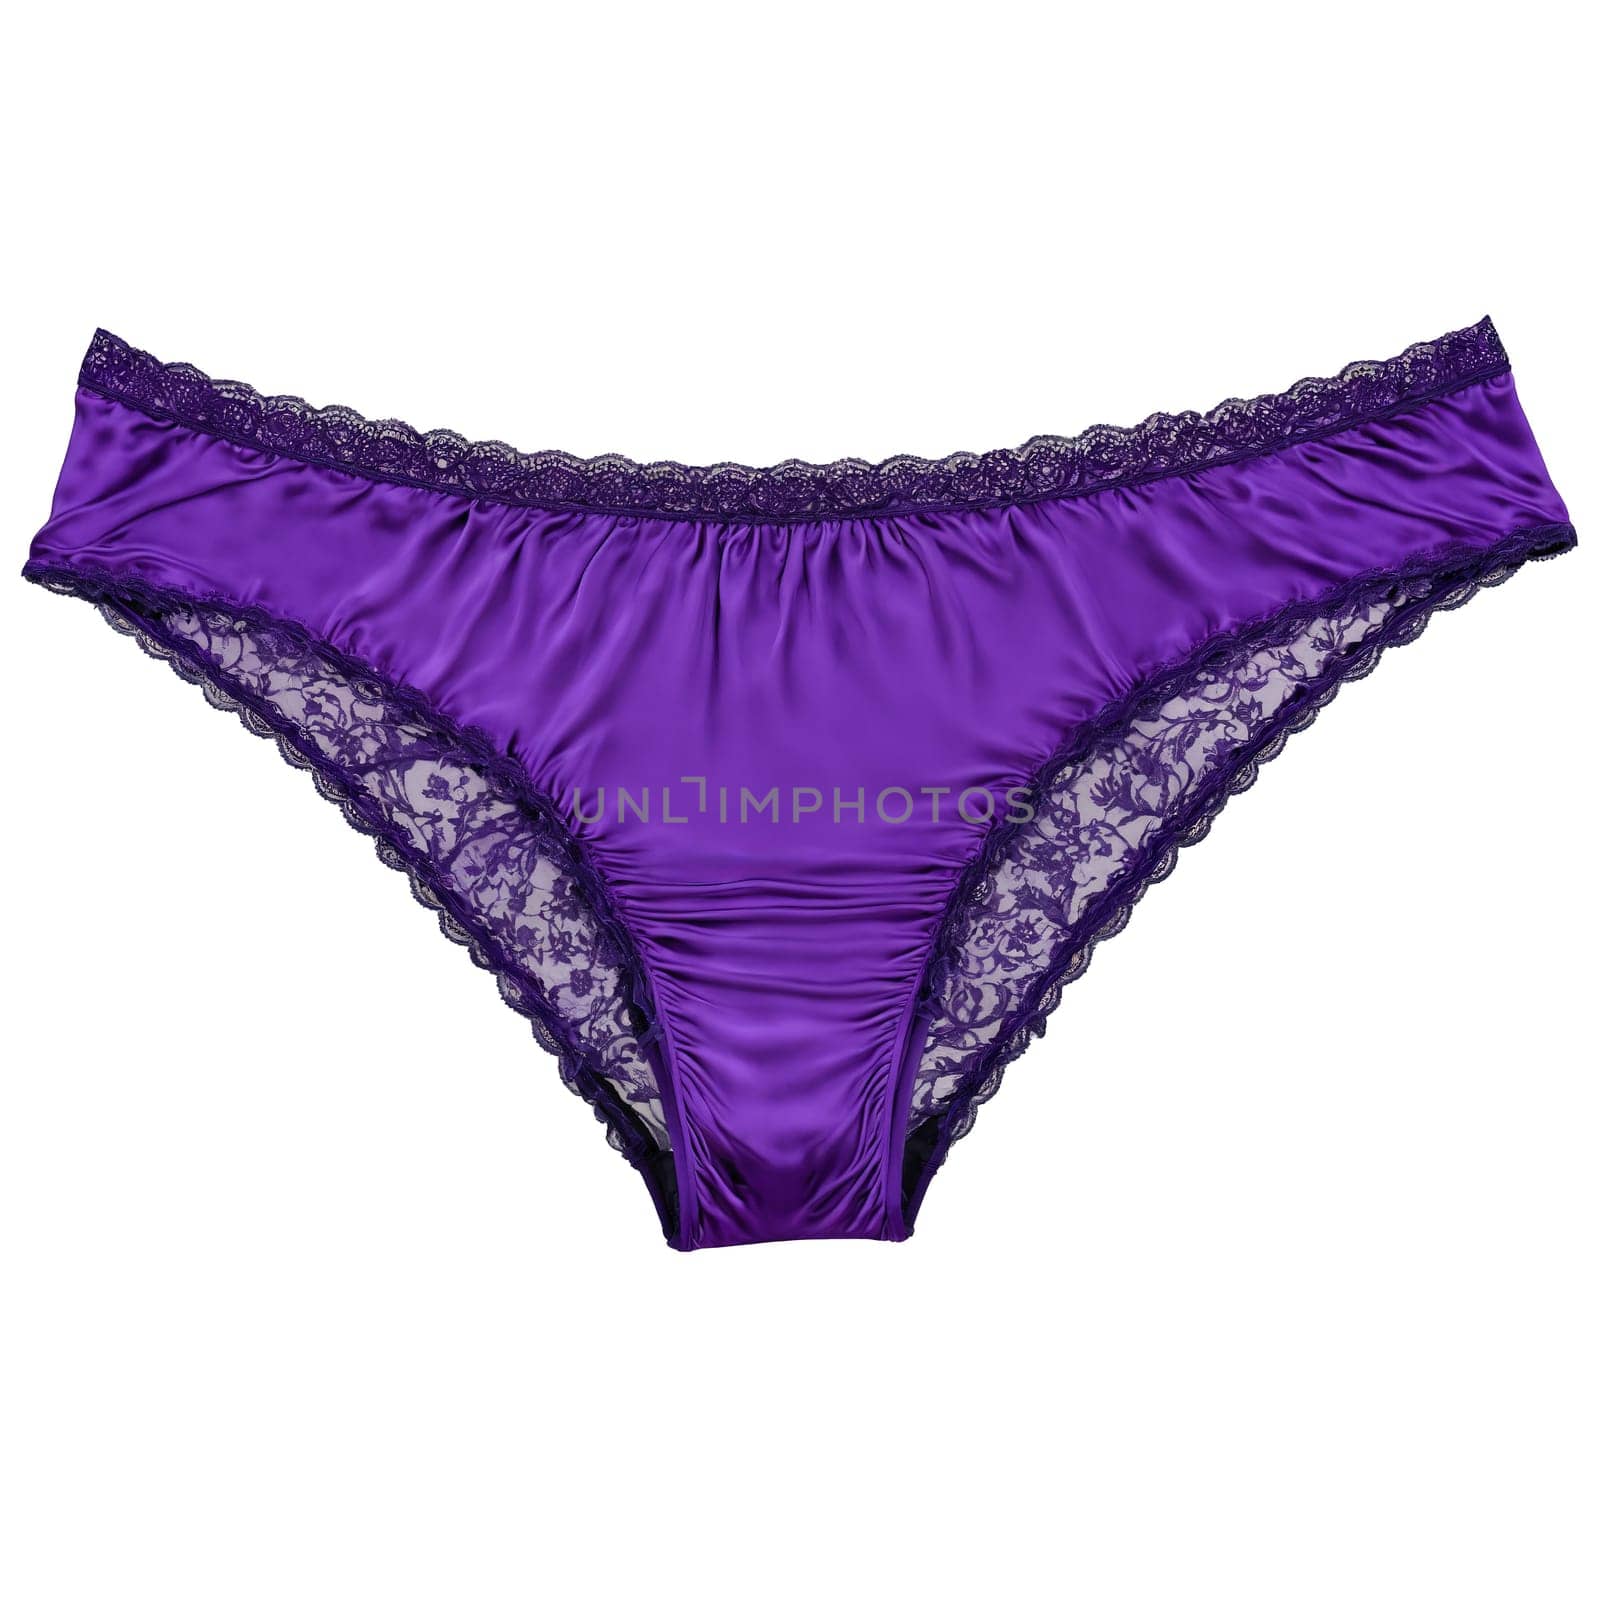 Purple Silk Underwear A pair of purple silk women s underwear with a rich. Woman lingerie isolated on transparent background